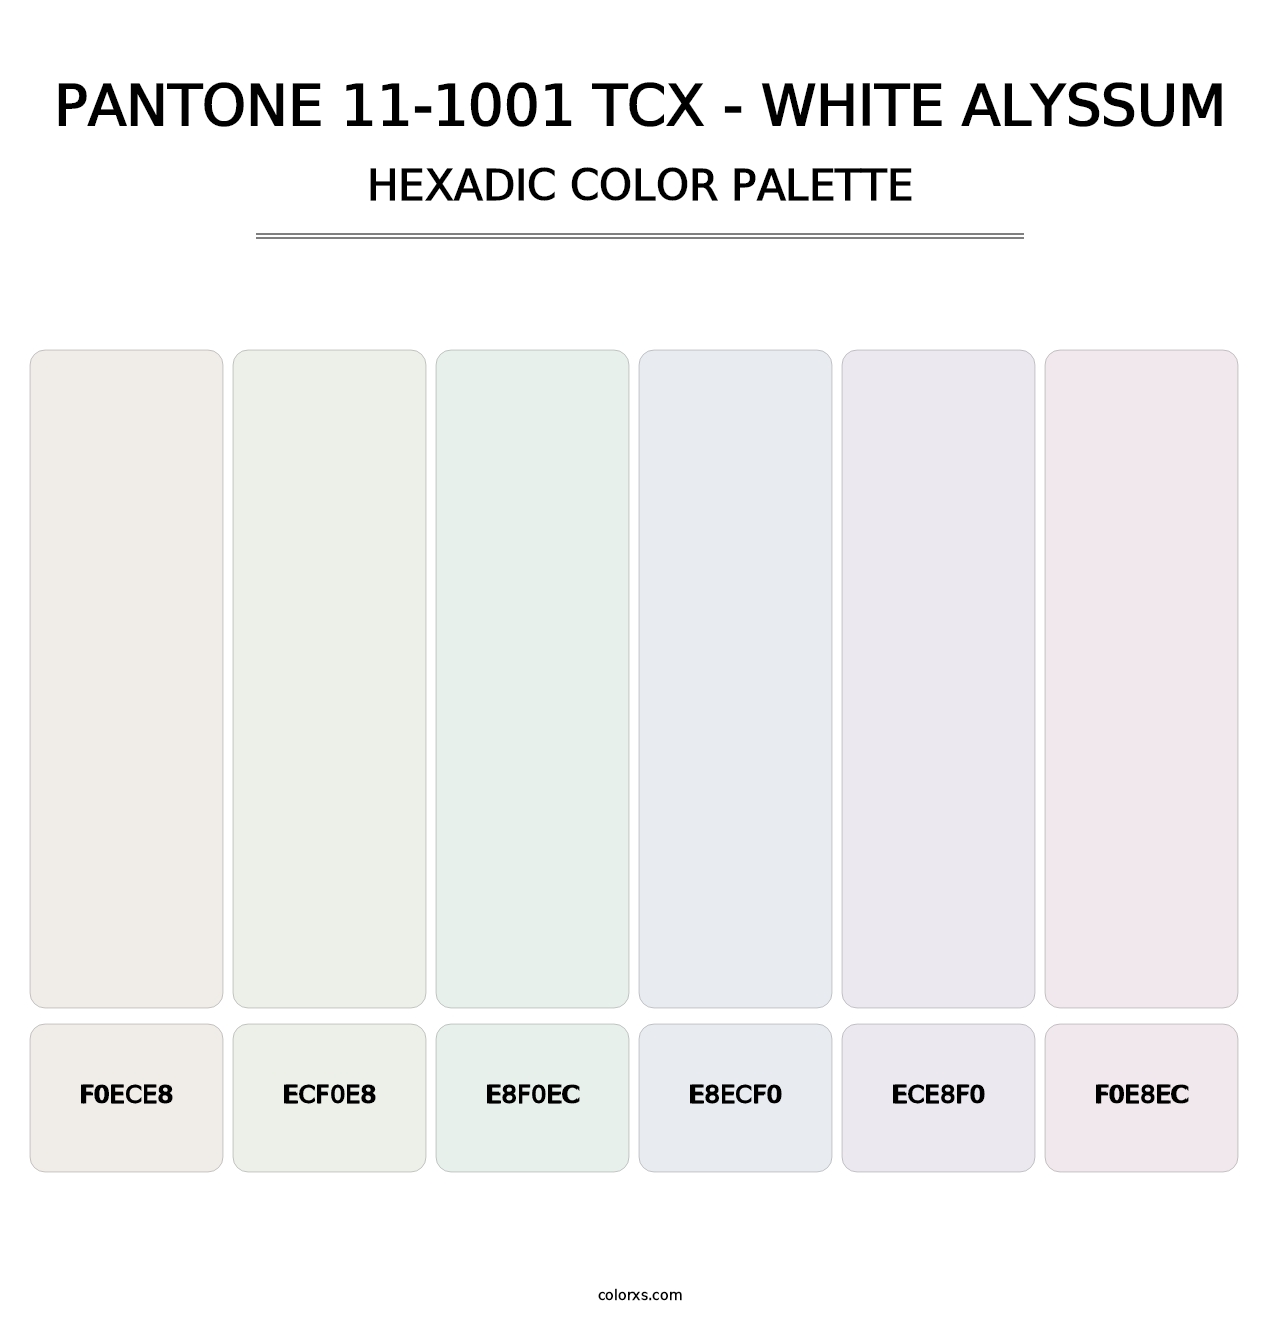 PANTONE 11-1001 TCX - White Alyssum - Hexadic Color Palette